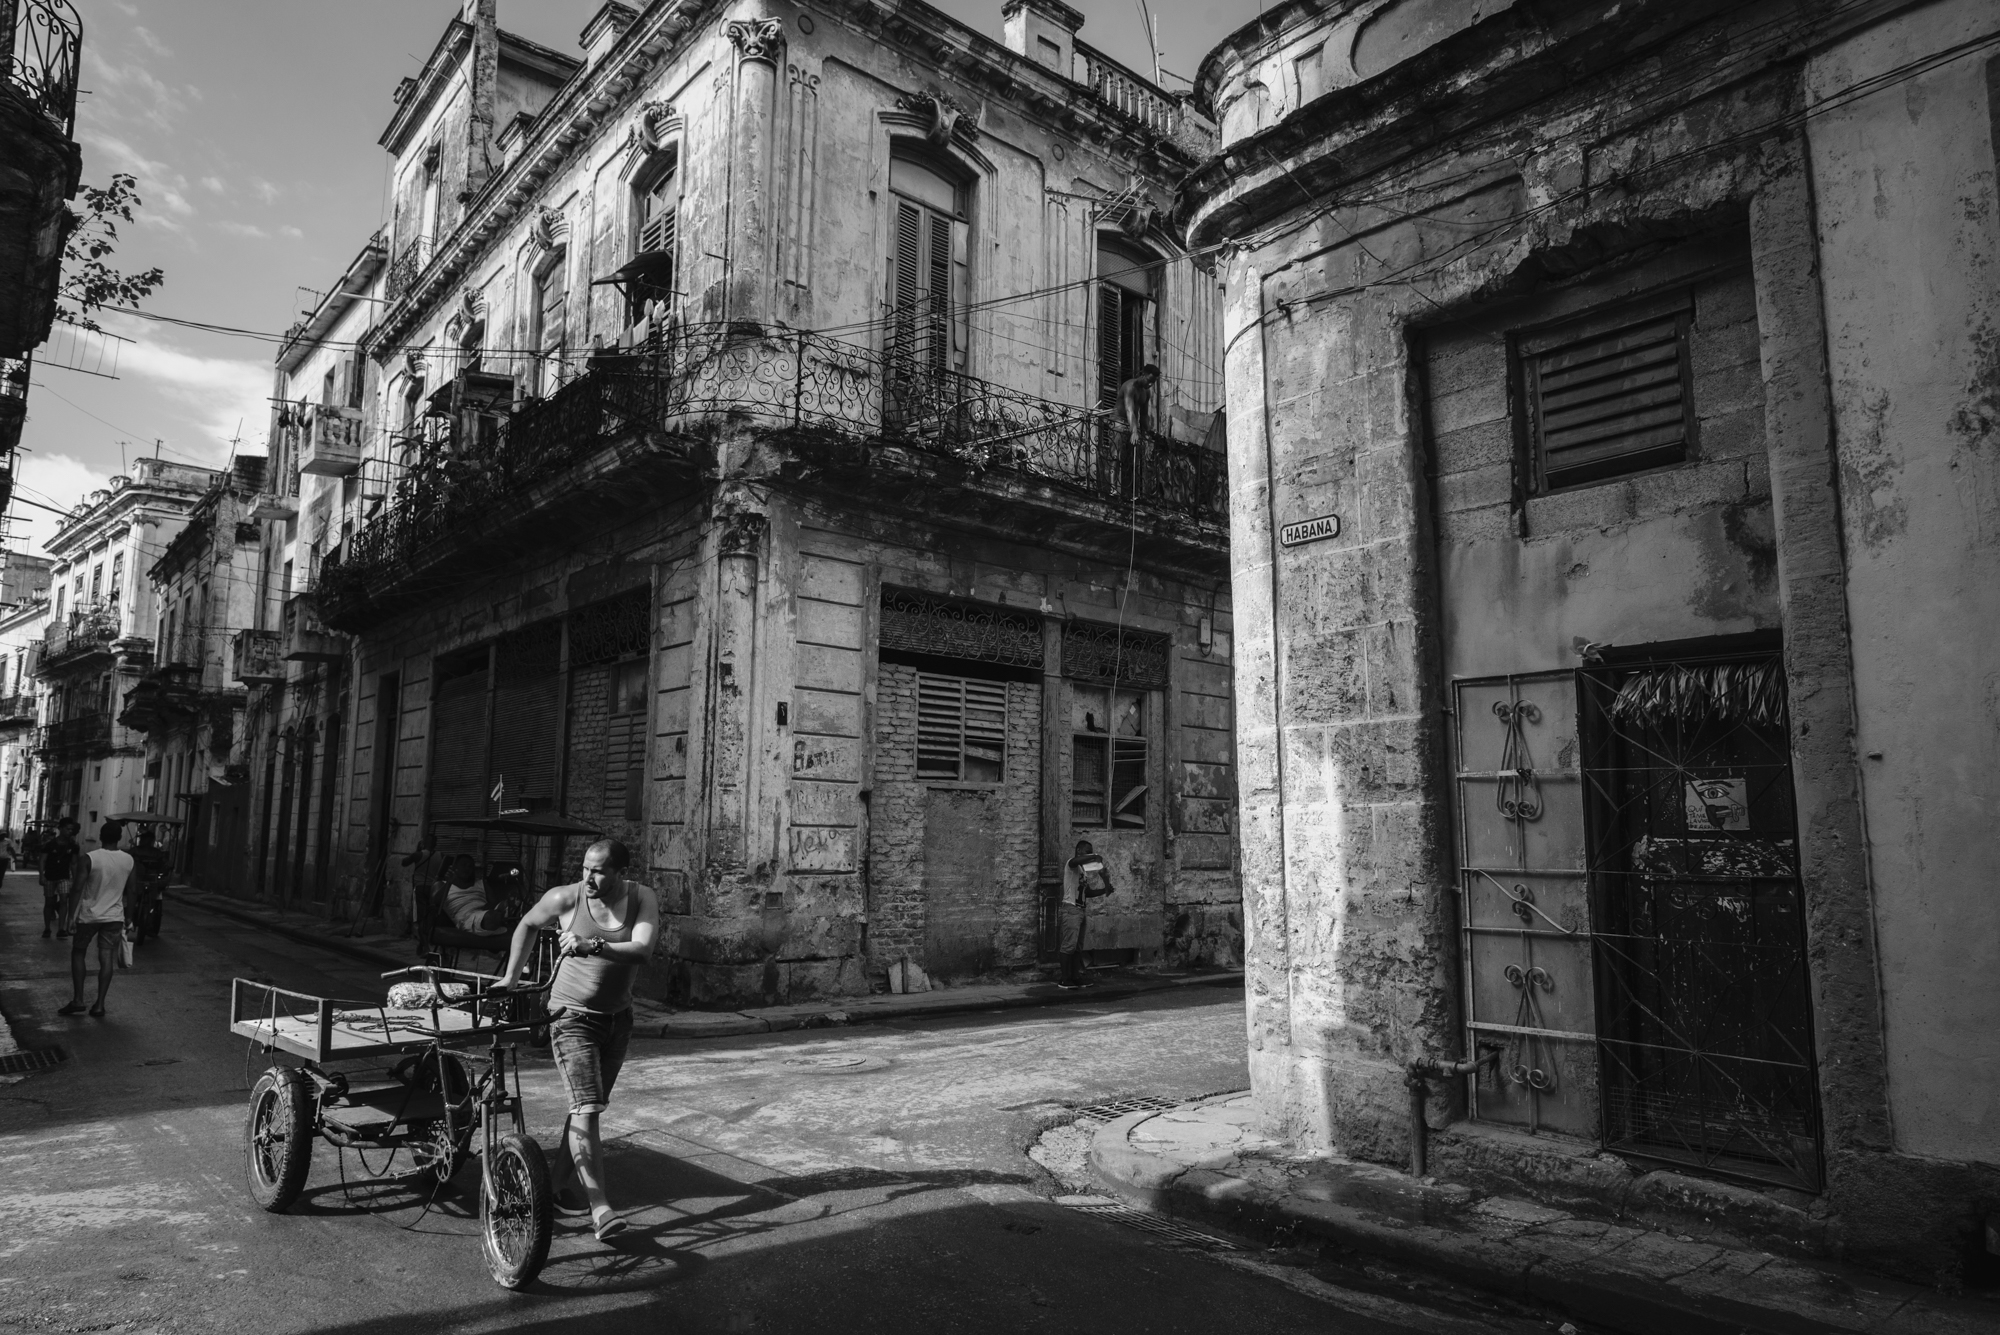 Havana St, Havana, photographic print by Mark Eden